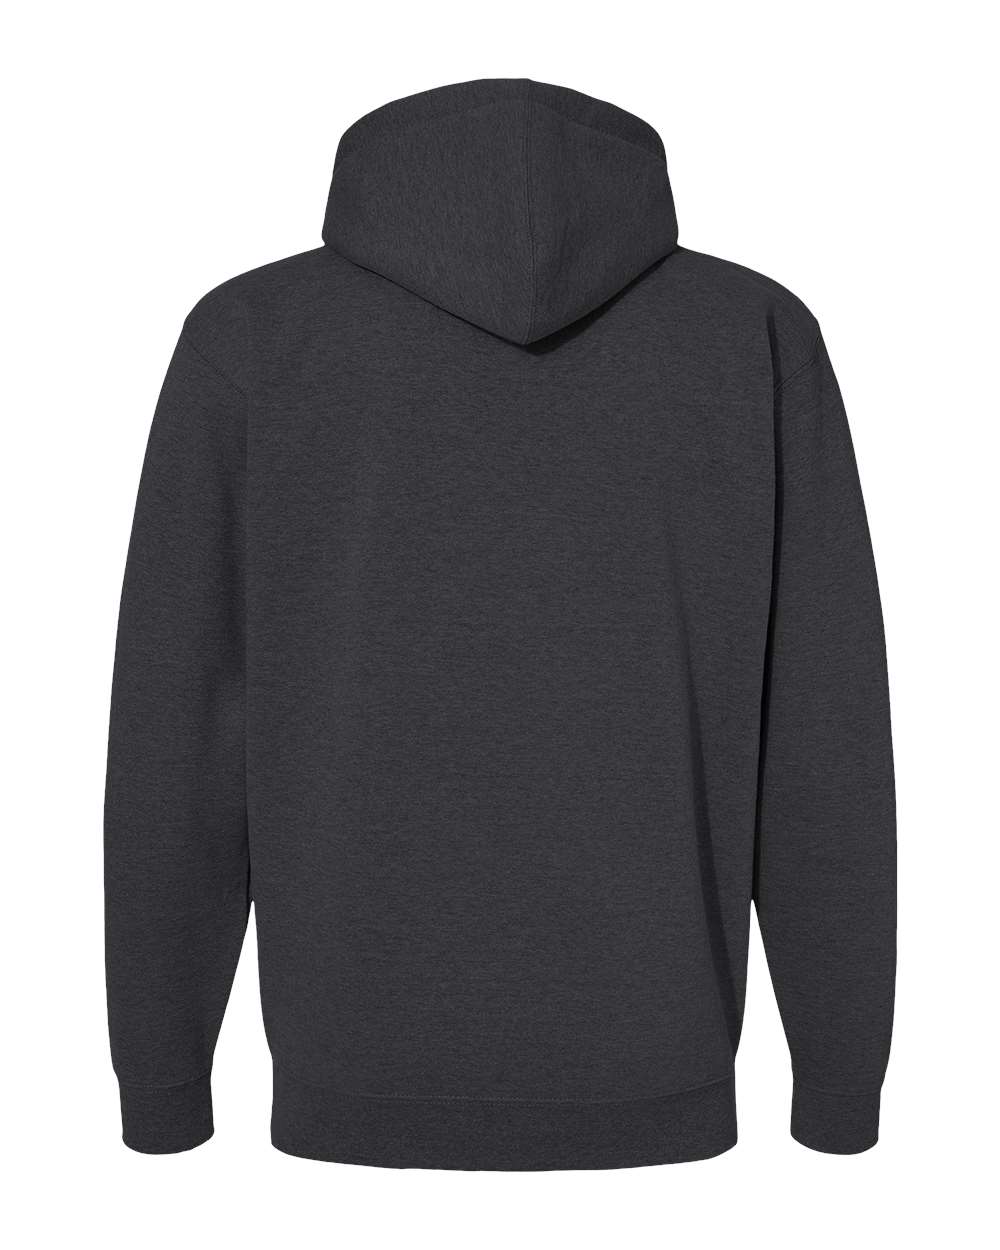 Independent Trading Co Mens Hooded Full-Zip Sweatshirt ...